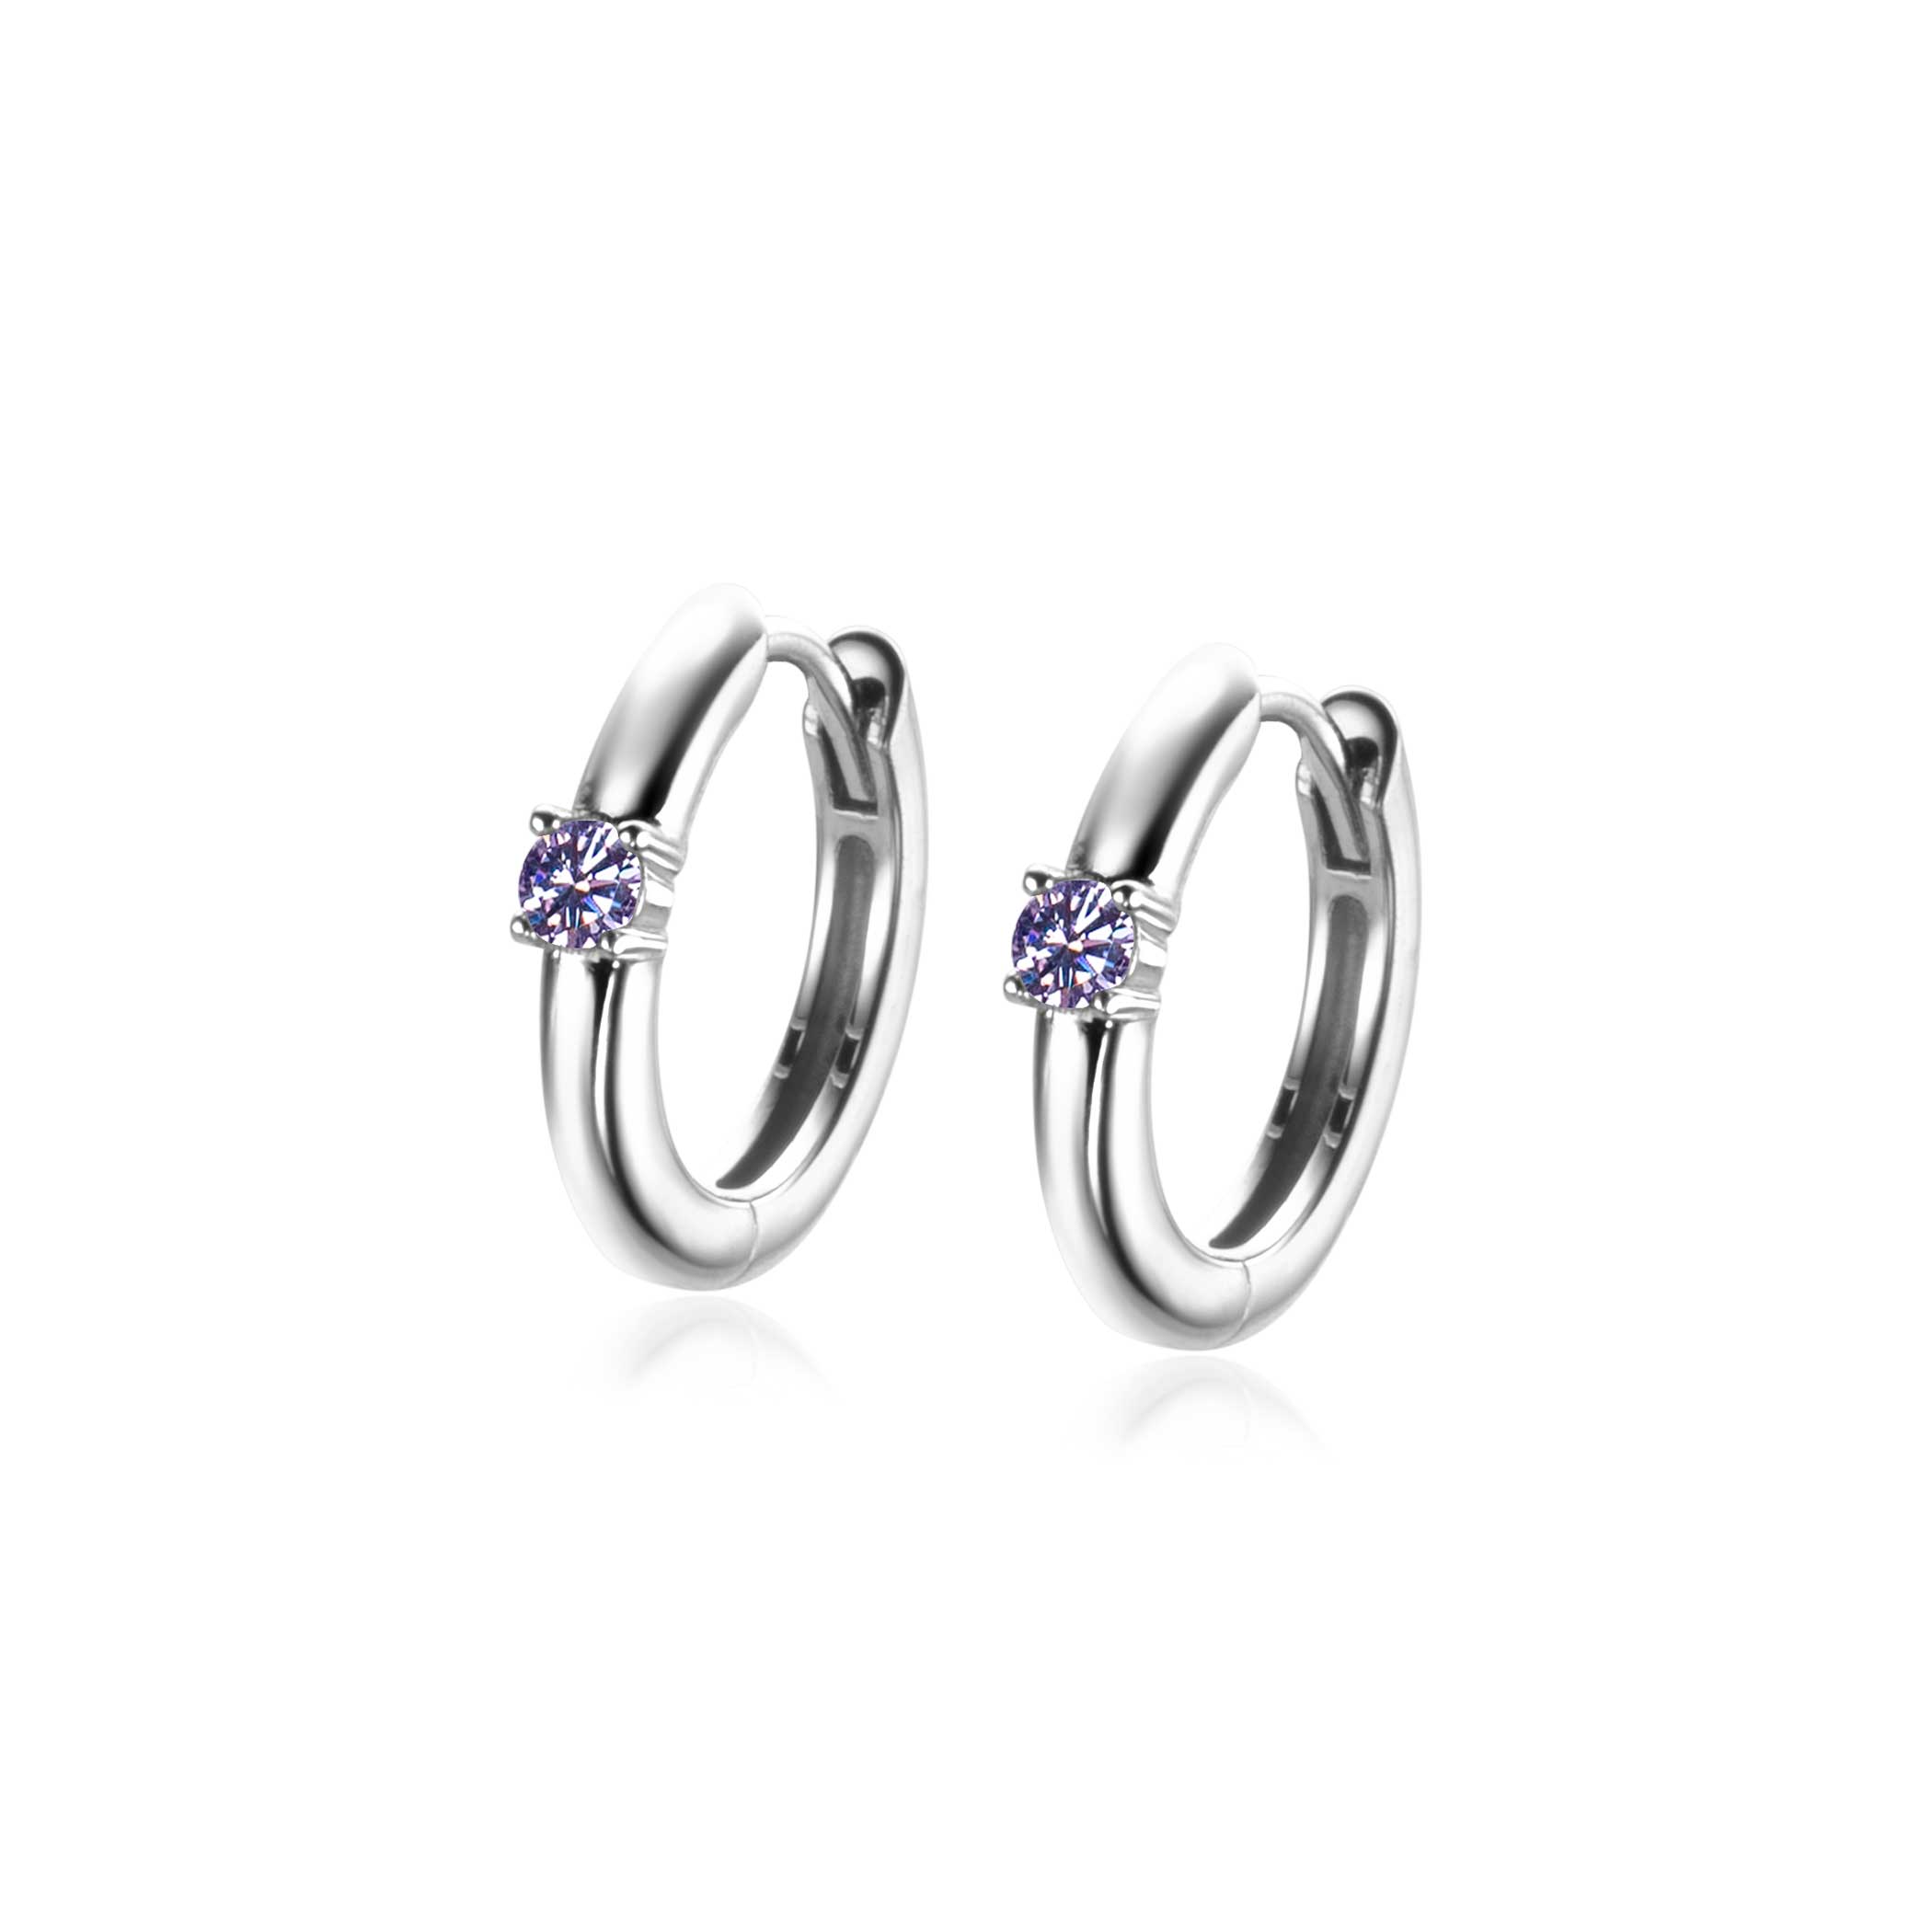 JUNE Hoop Earrings 13mm Sterling Silver with Birthstone Light Purple Amethyst Zirconia